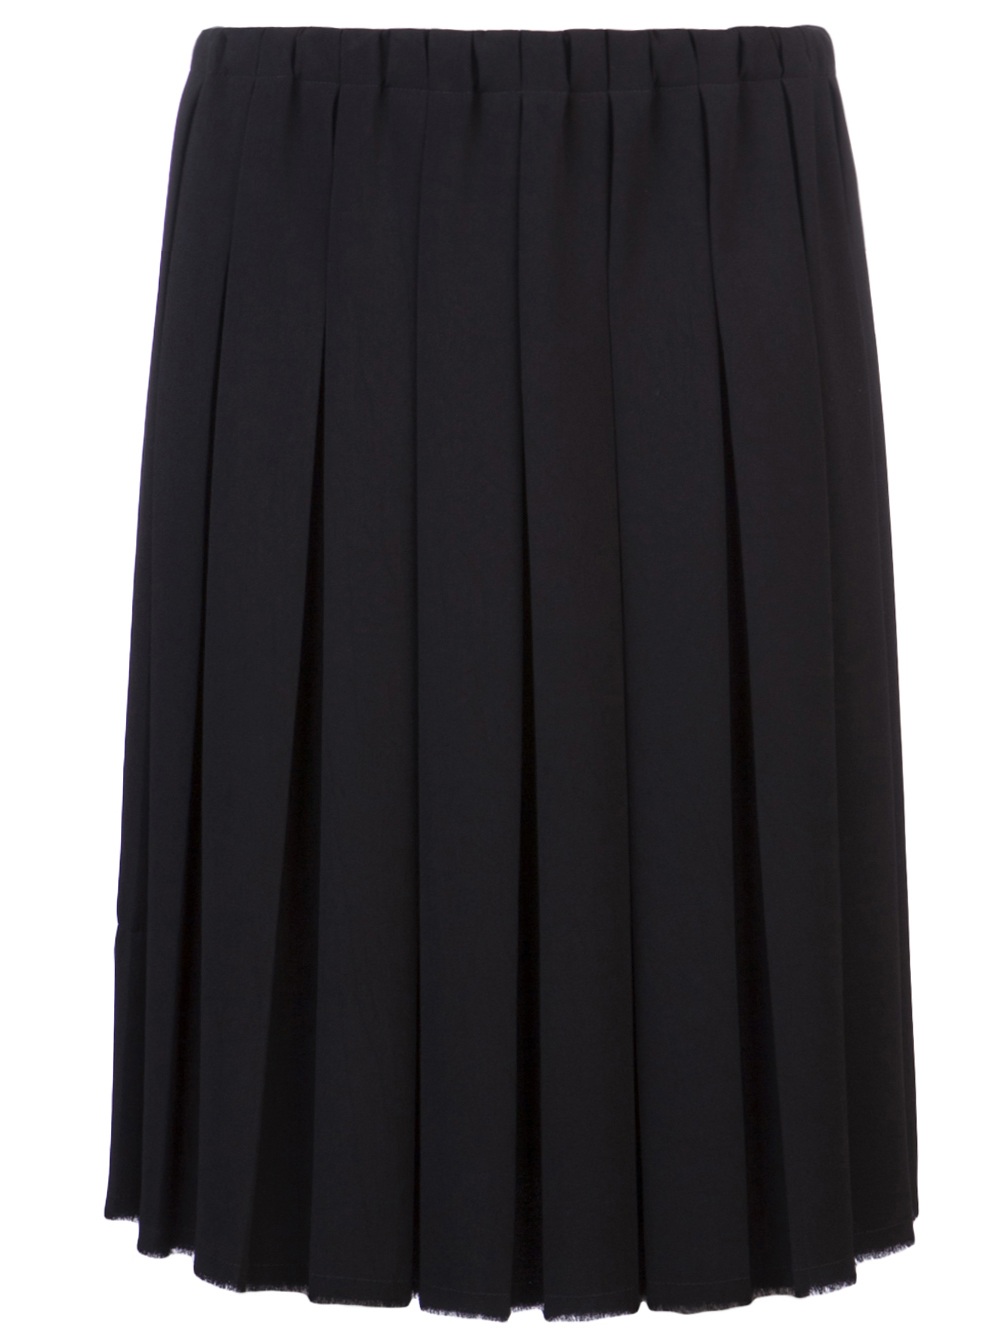 Lanvin Vault Accordion Pleat Skirt in Black | Lyst